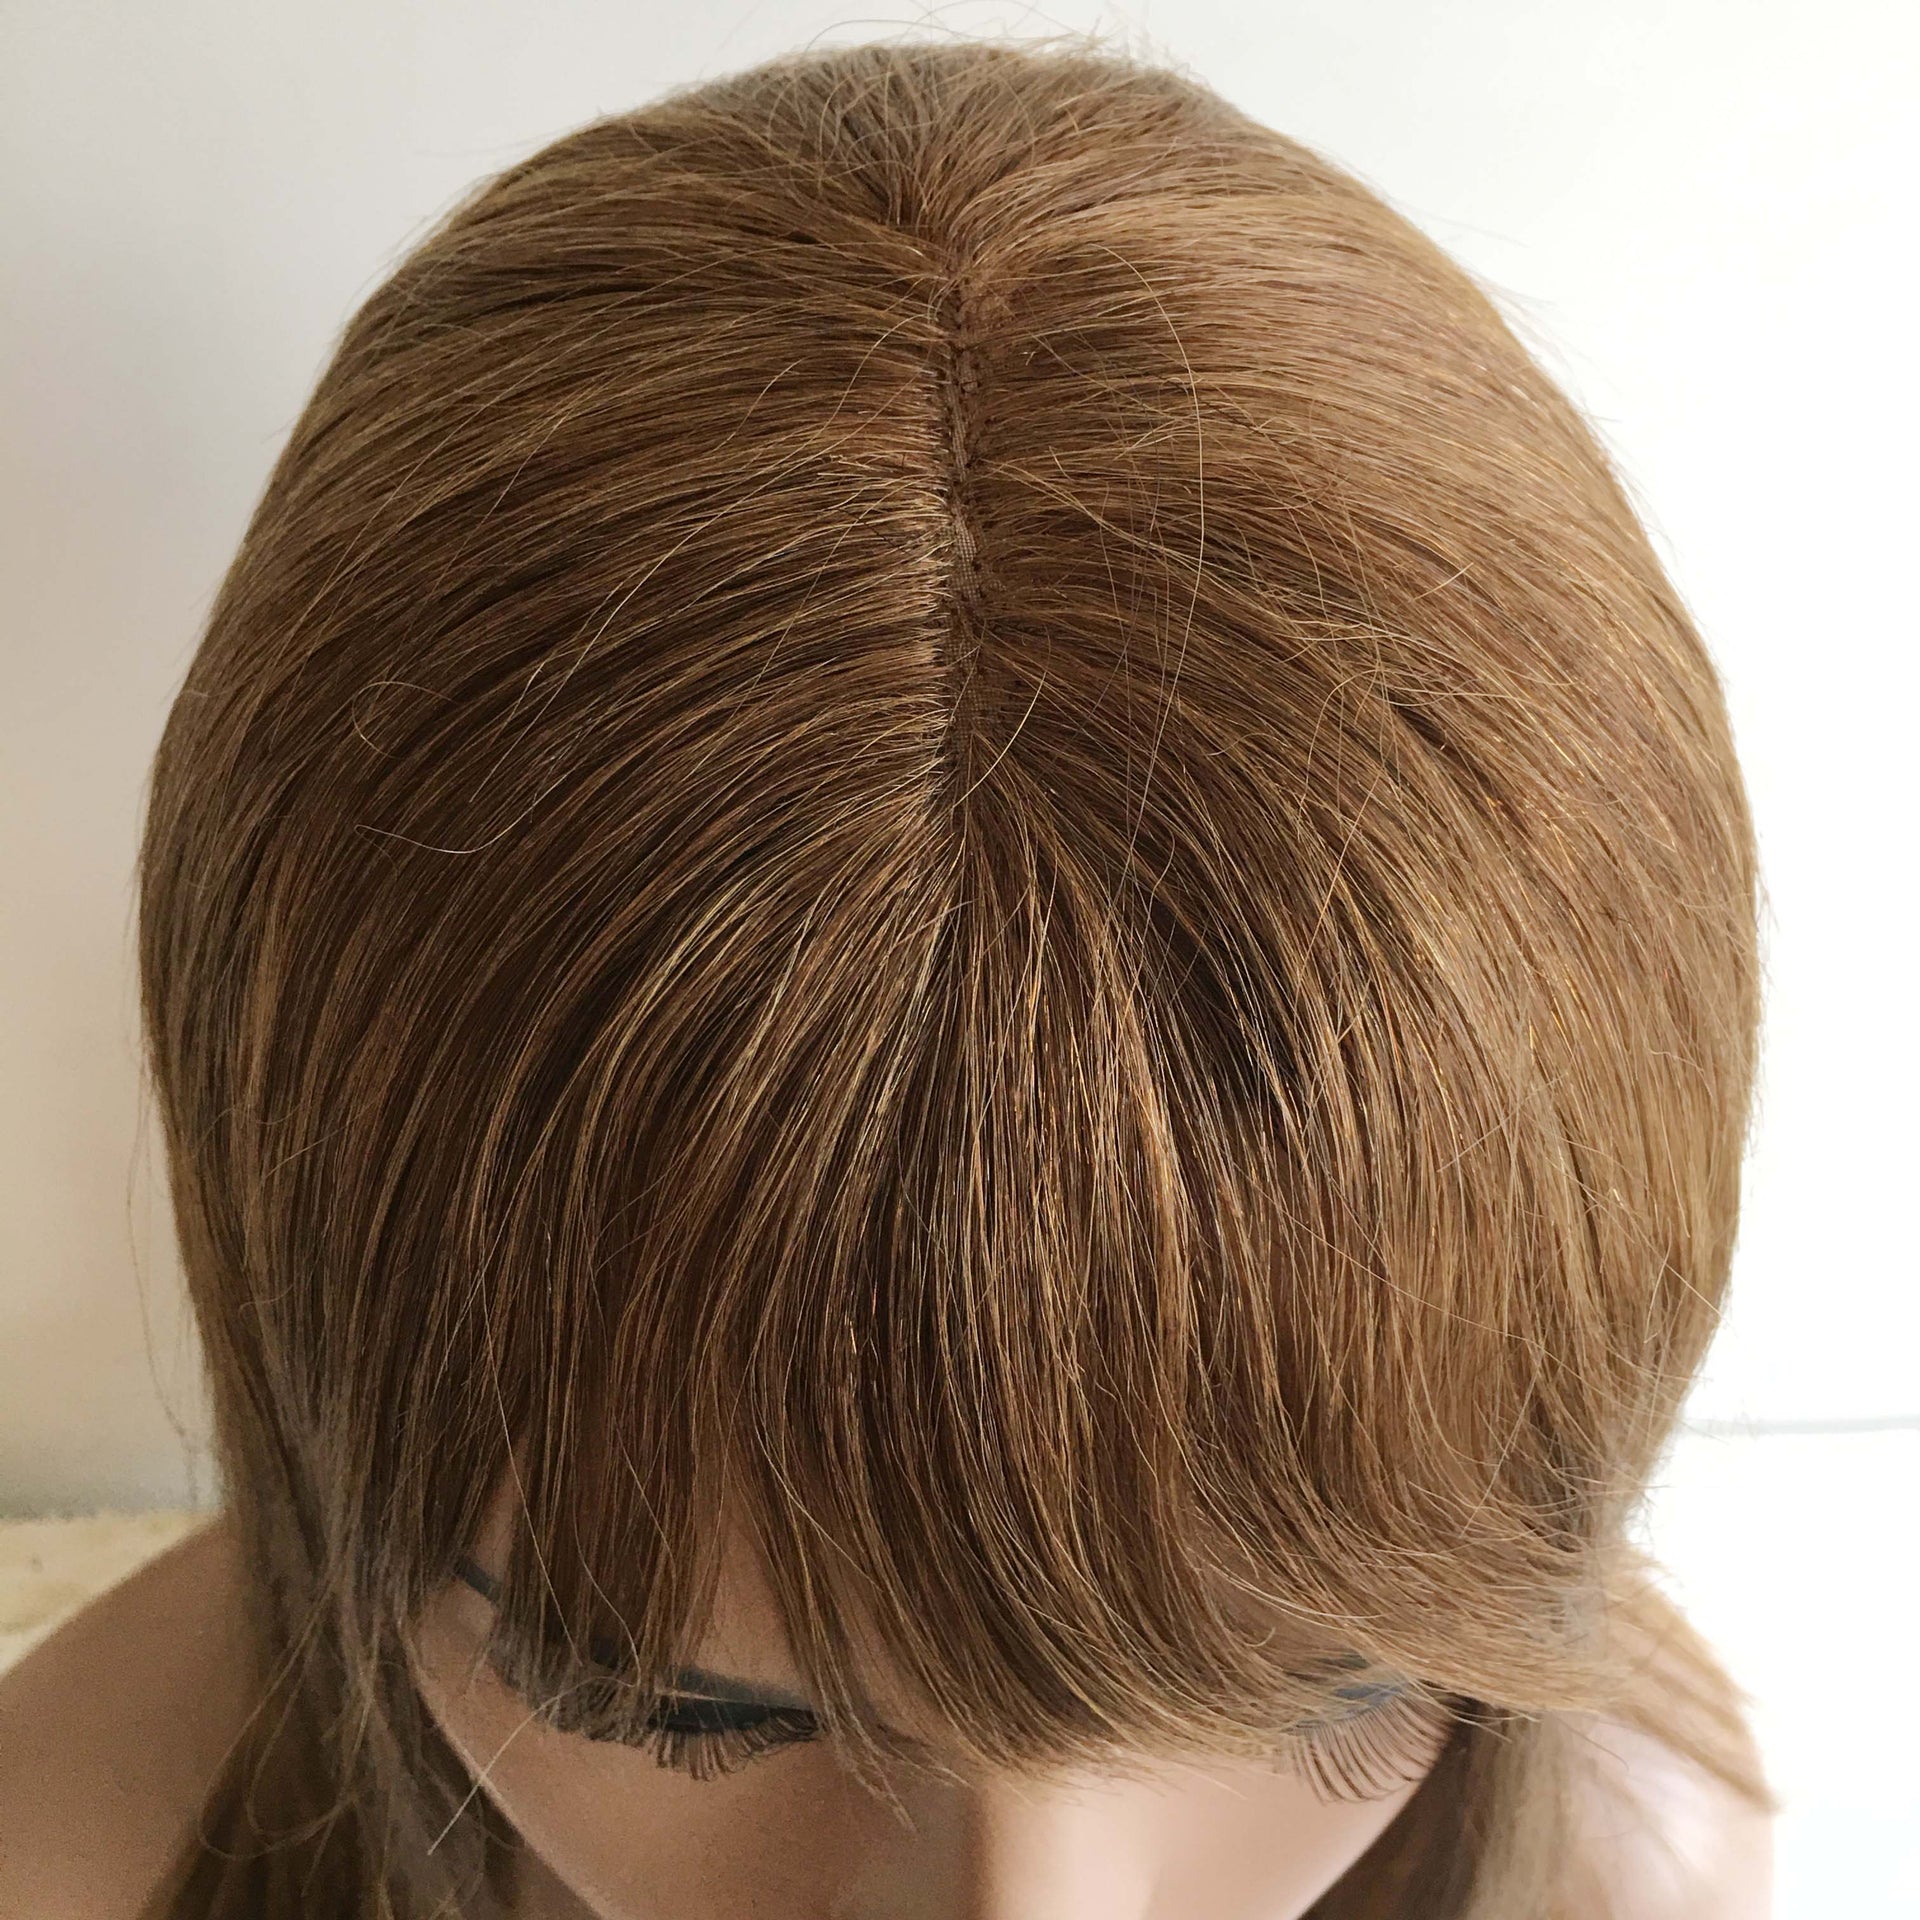 nevermindyrhead Women Caramel Brown Real Human Hair Medium Length Straight Bob Fringe Bangs Wig 14 Inches